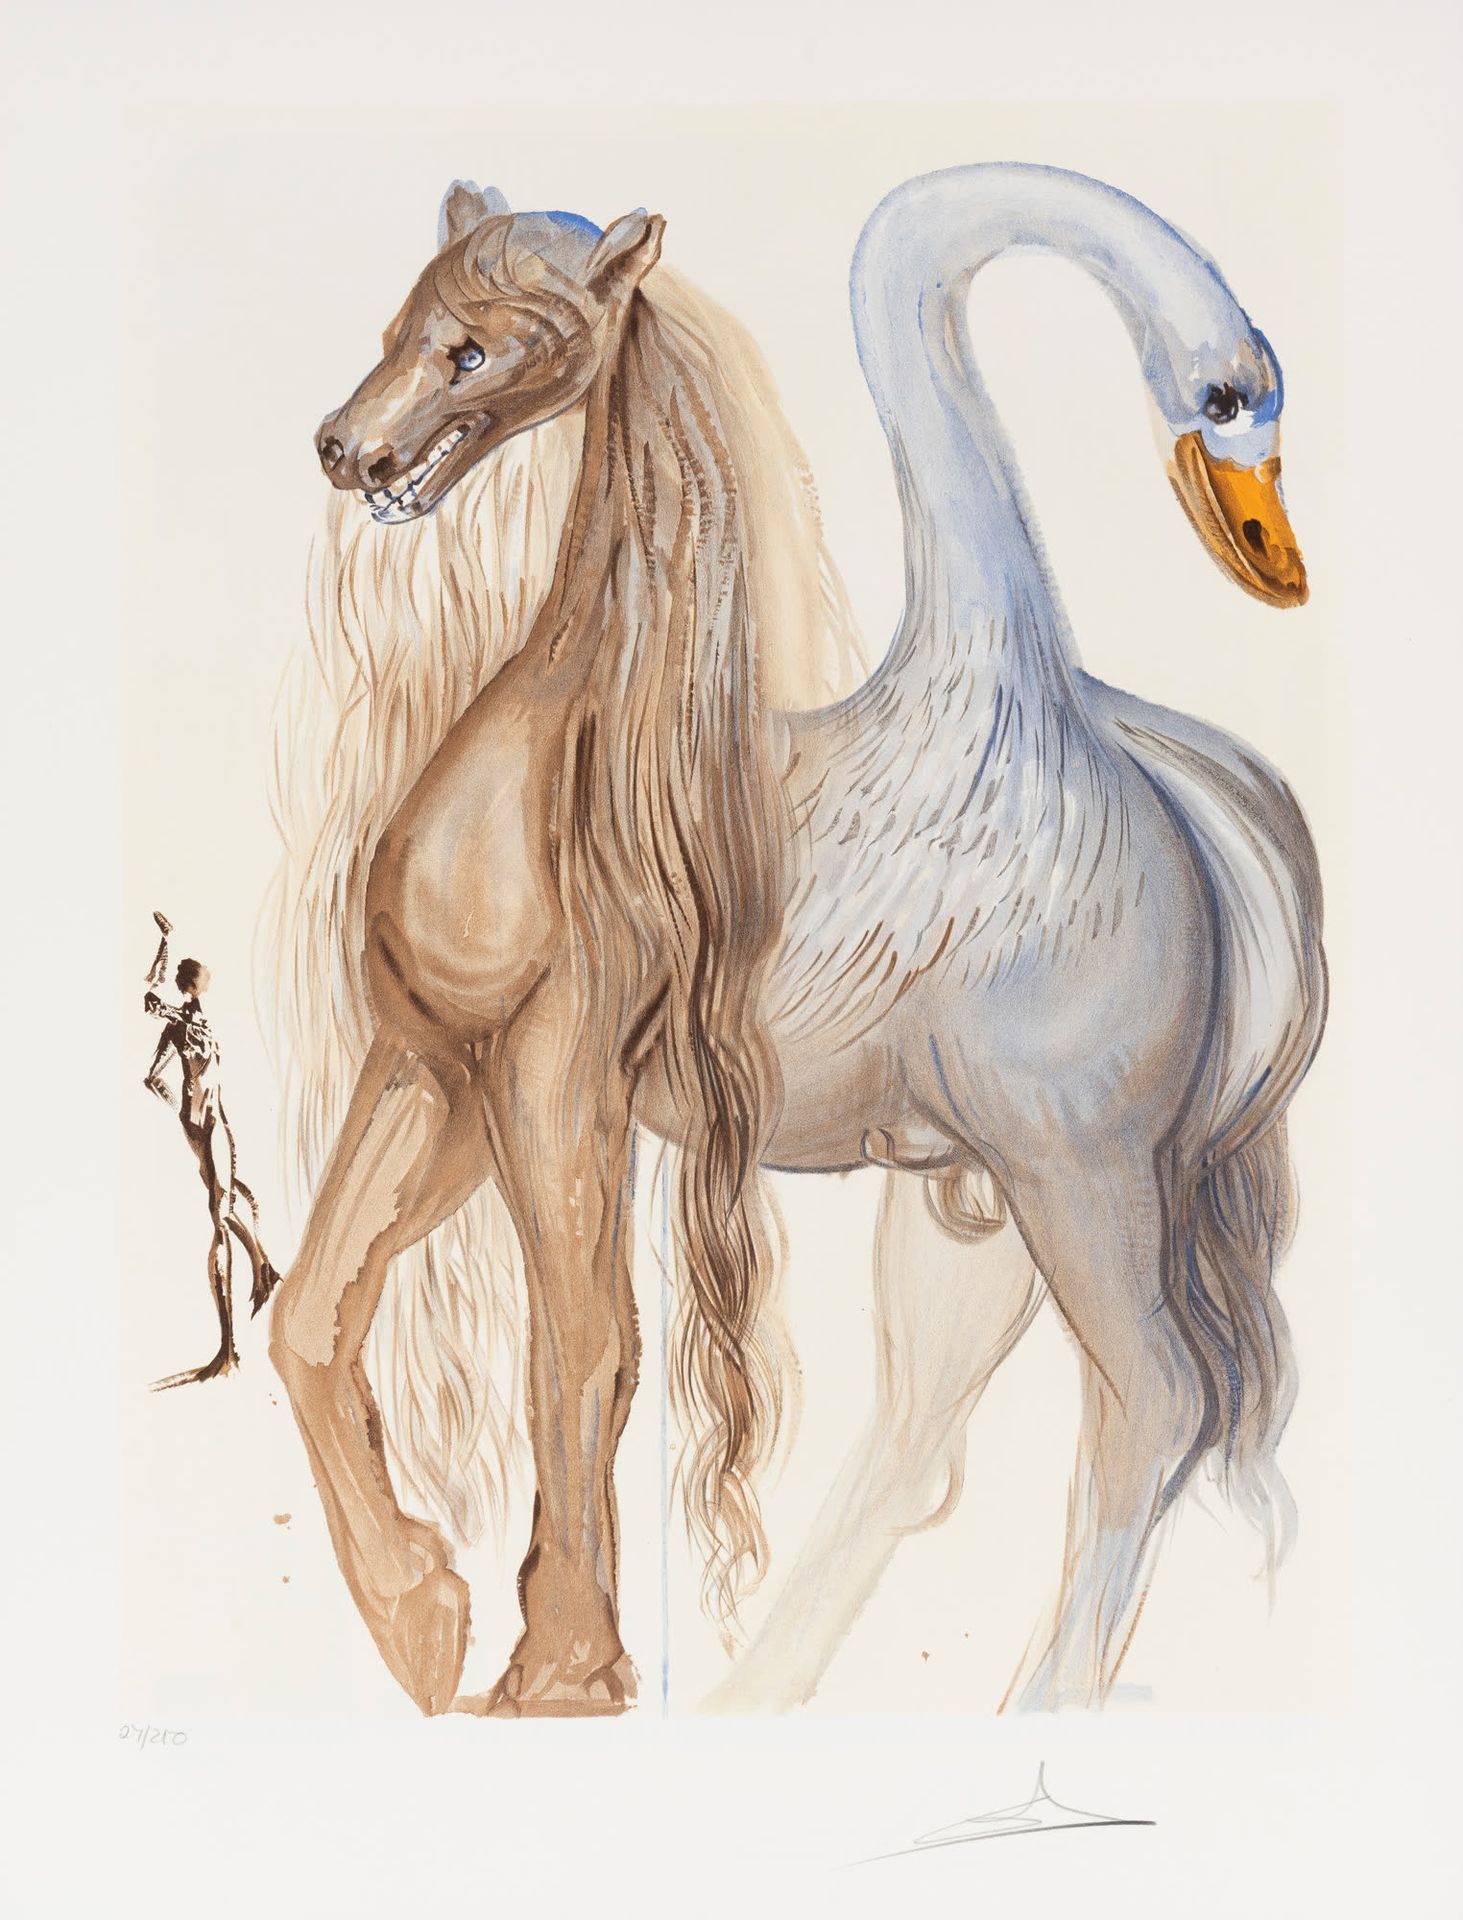 Salvador DALI (1904-1989) Les chevaux Daliniens, 1973.
Komplettes Portfolio mit &hellip;